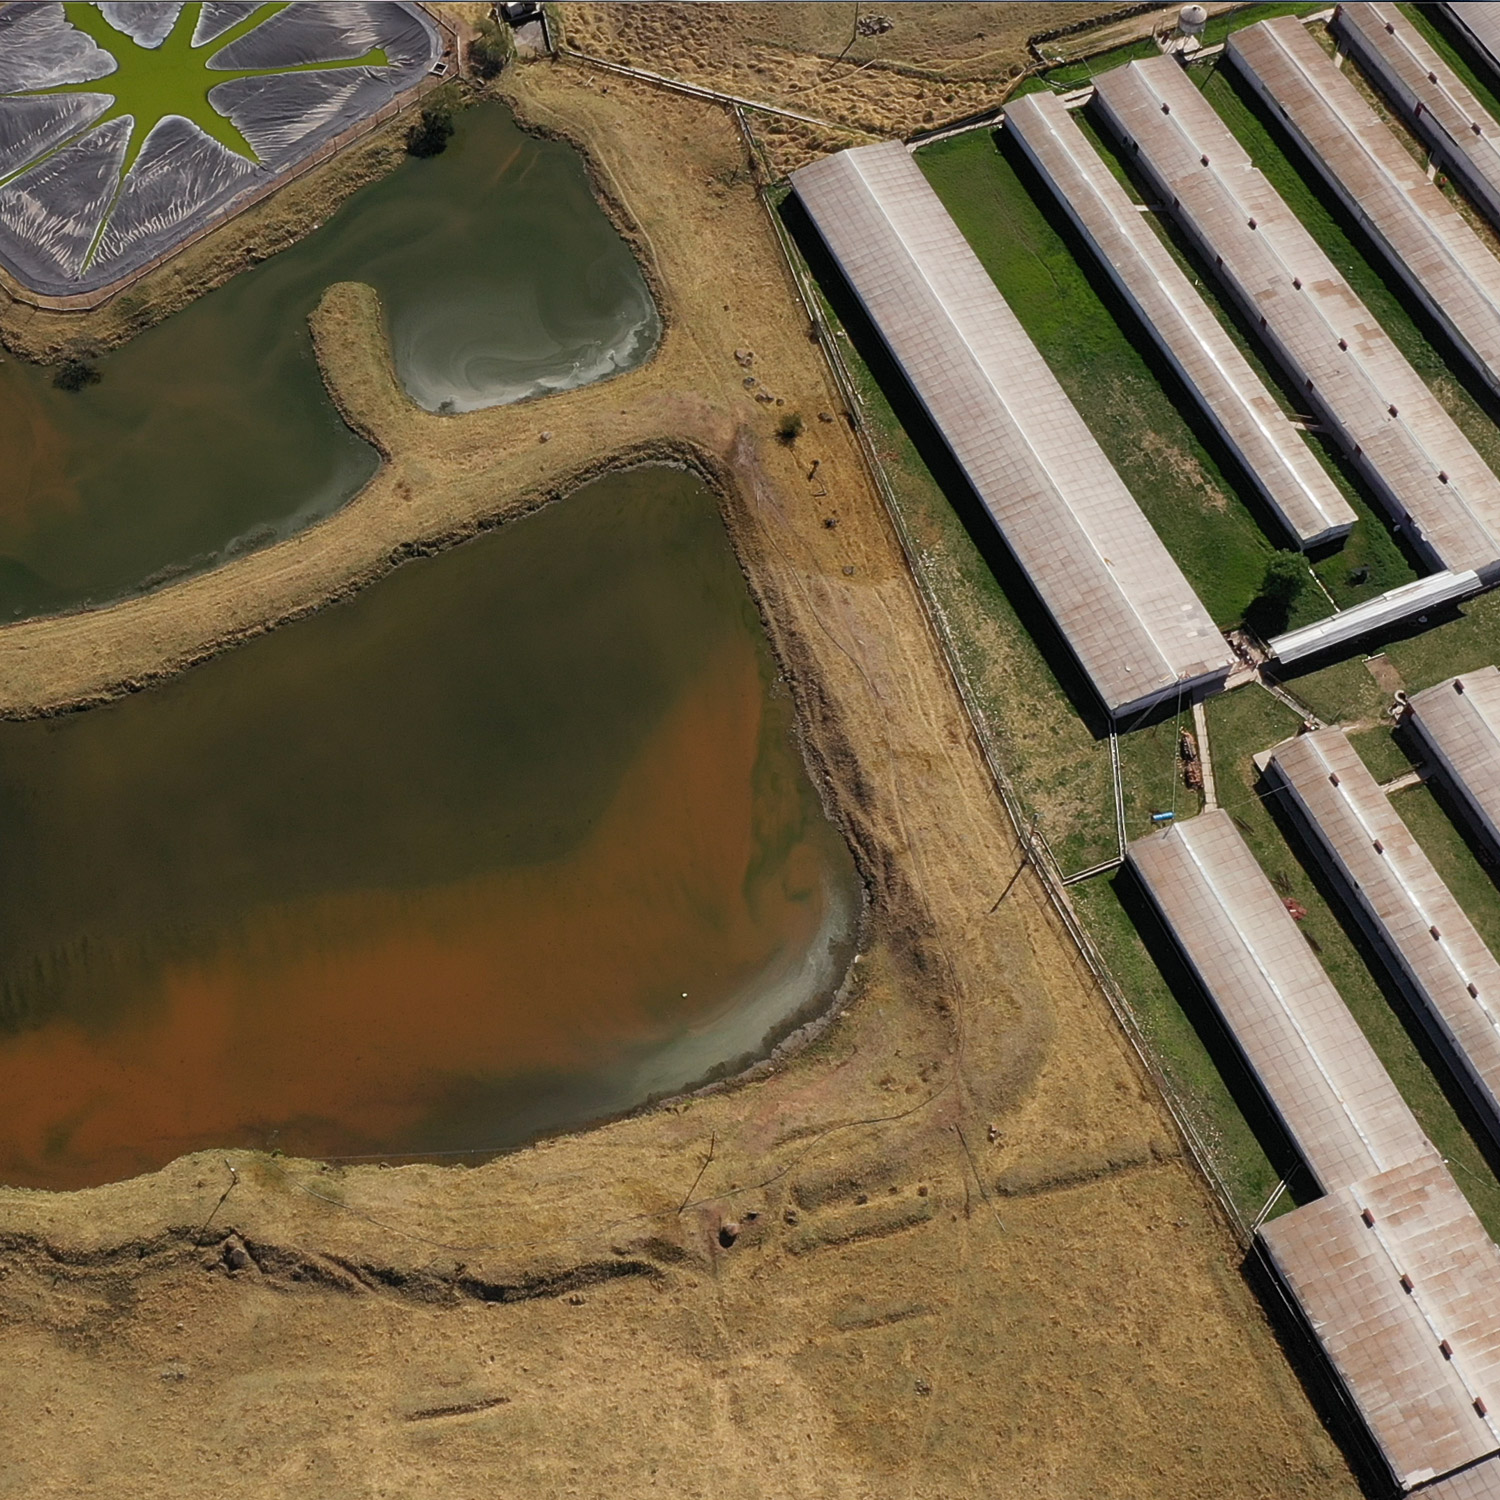 sewage lagoon on industrial farm